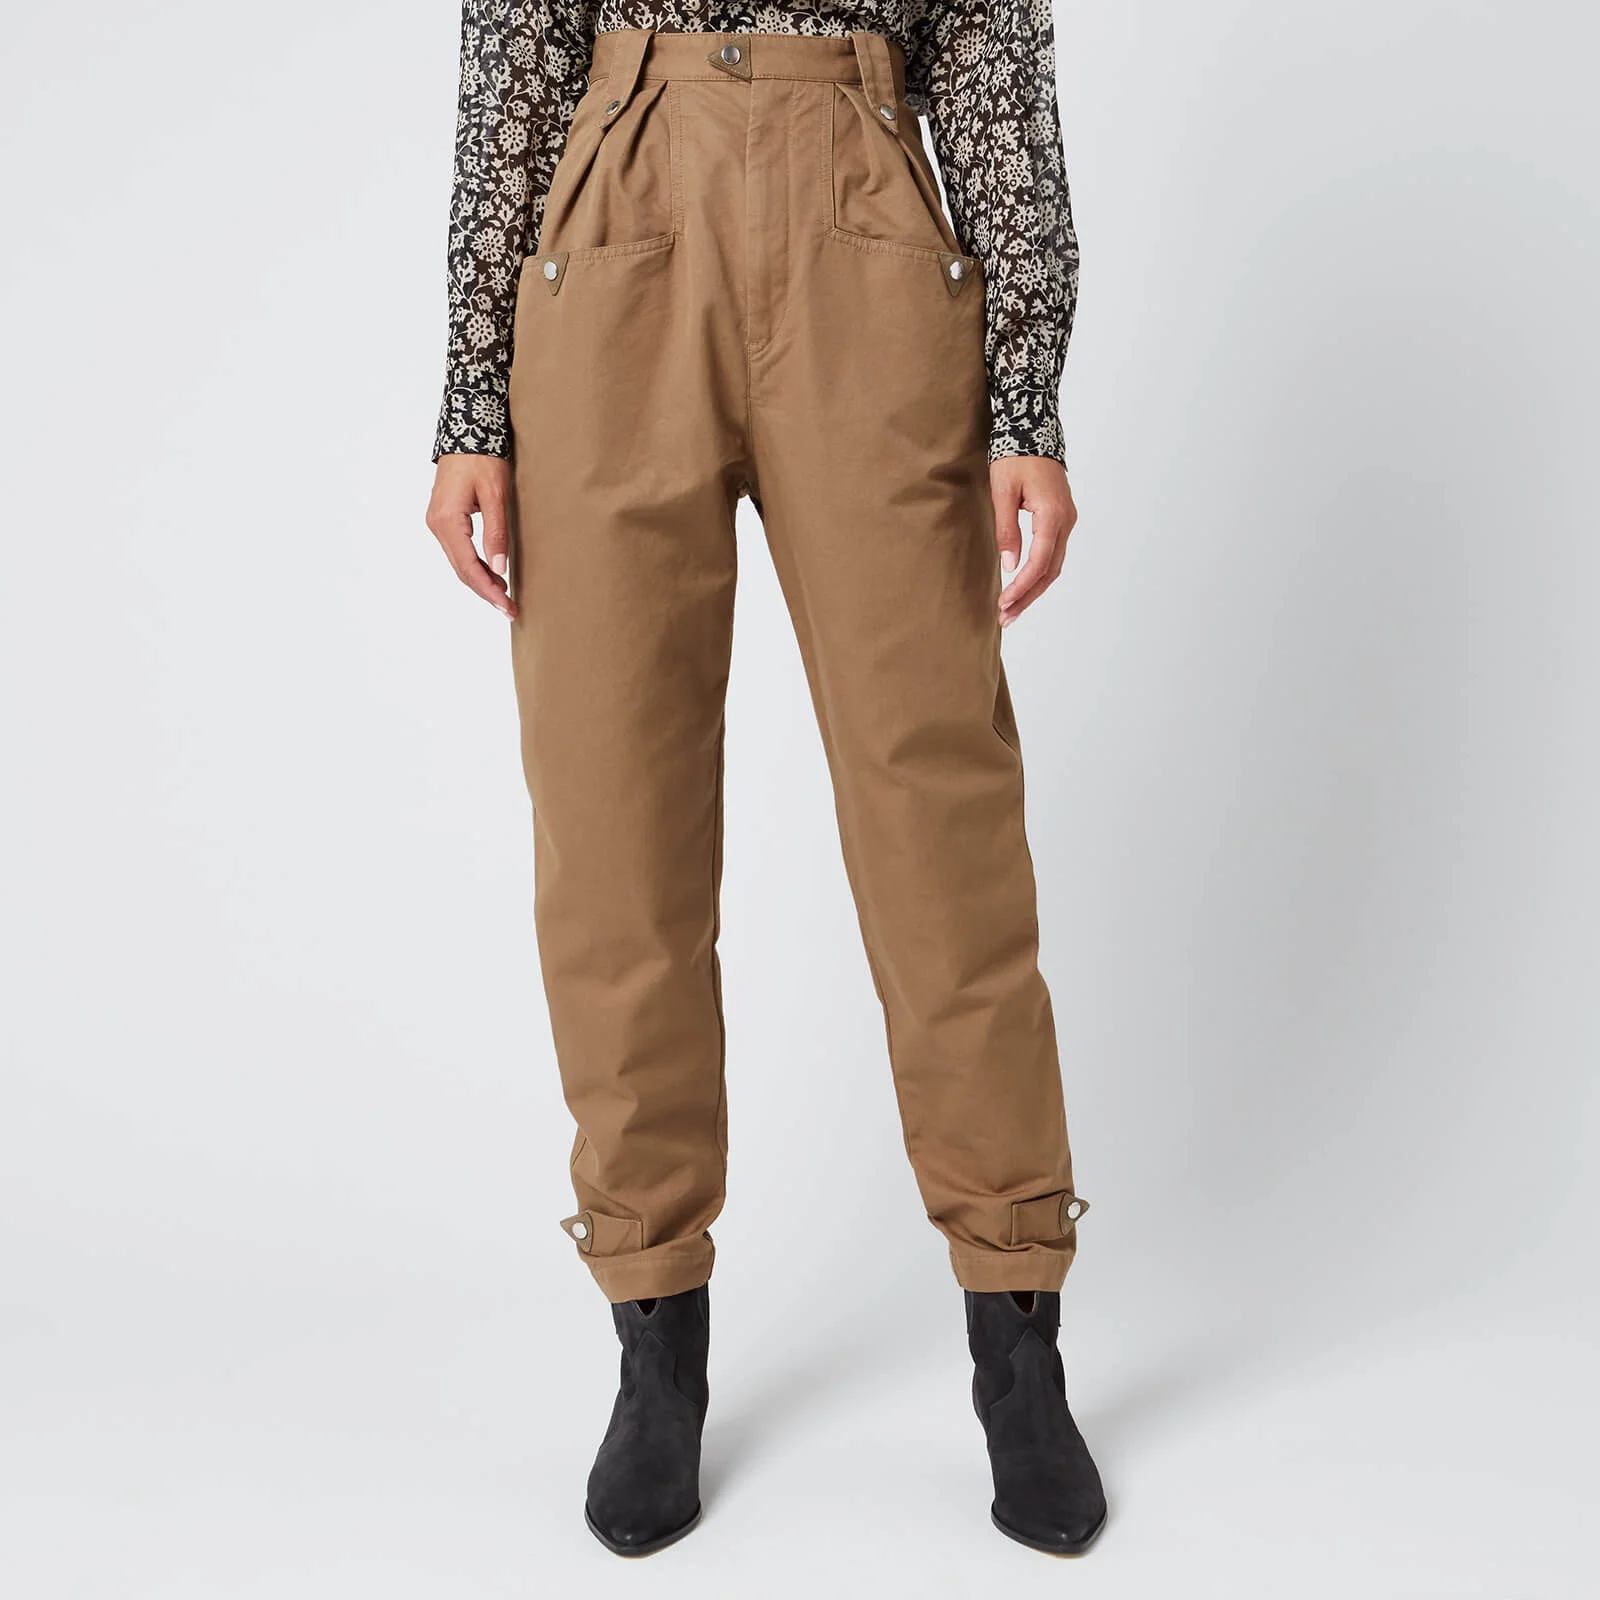 Marant Etoile Women's Pulcie Trousers - Khaki Image 1